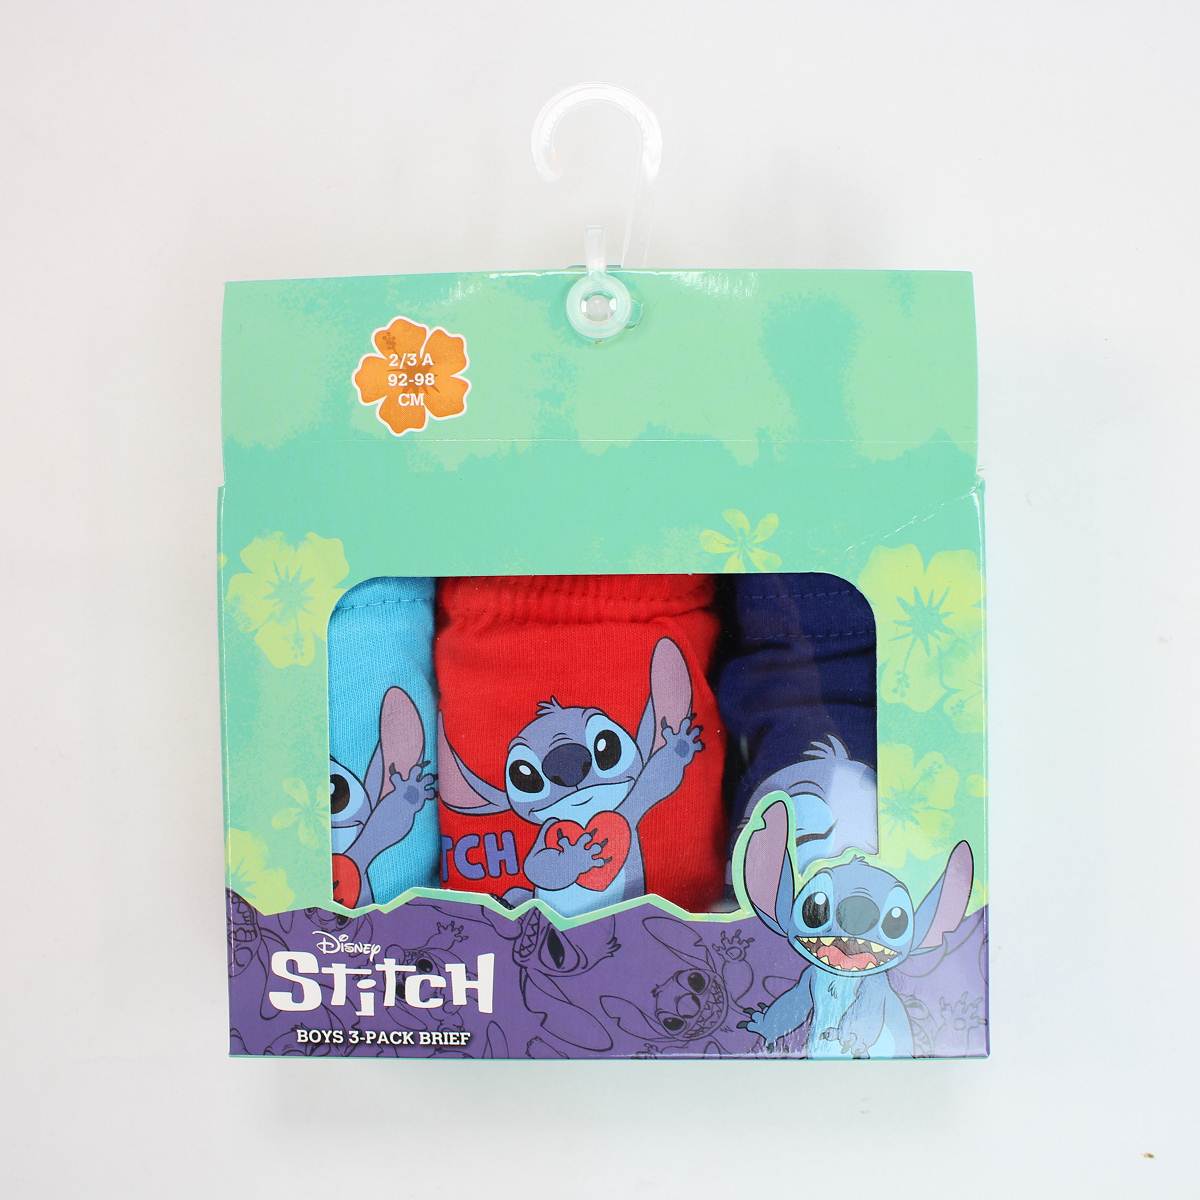 3-Pack of Lilo & Stitch ©Disney briefs